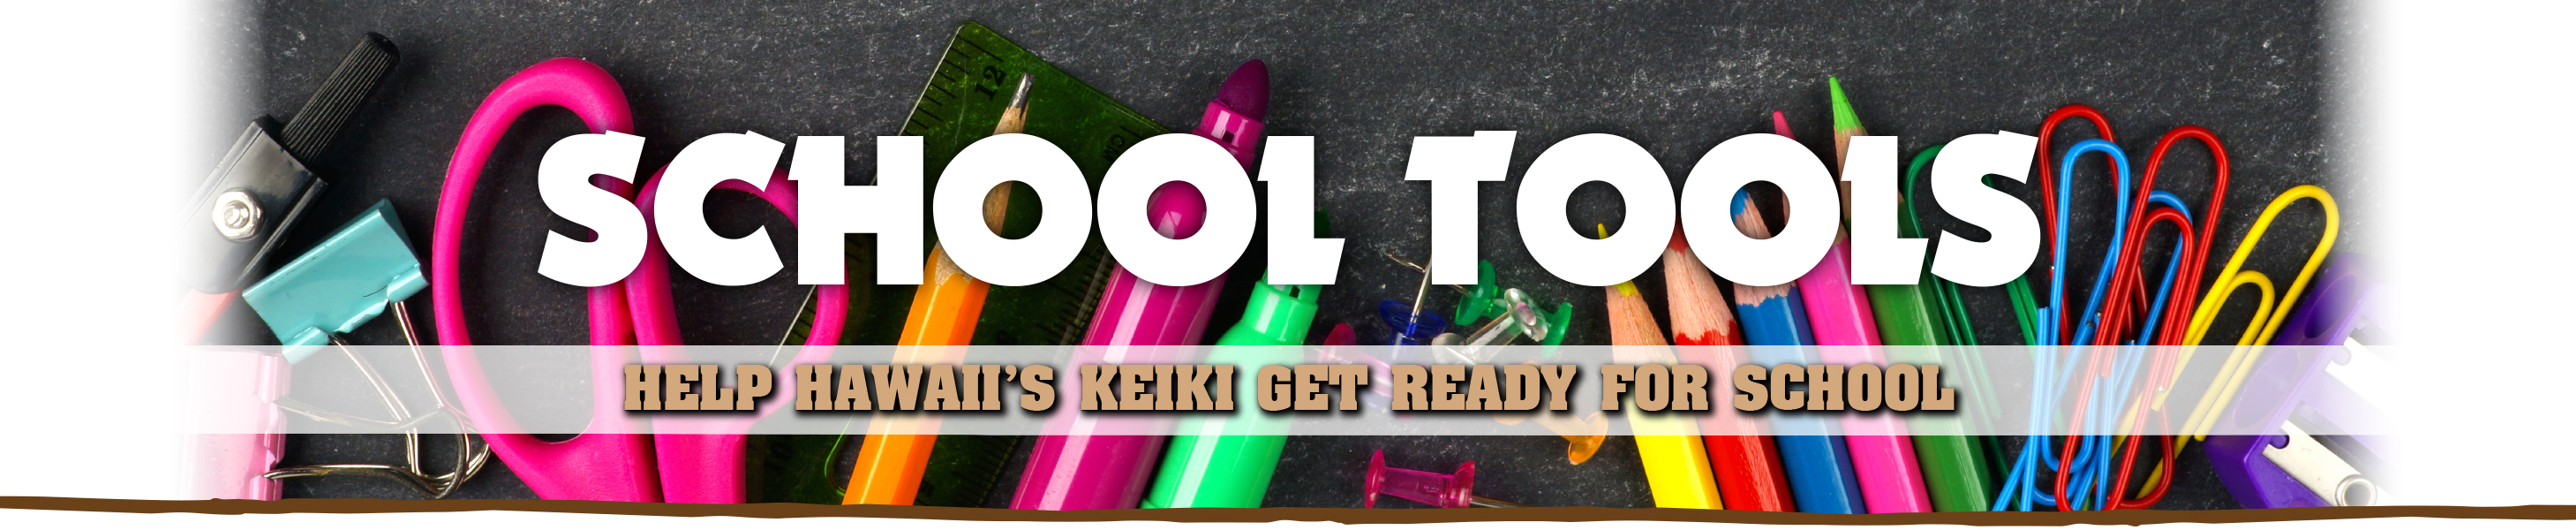 School Tools. Help Hawaii's keiki get ready for school